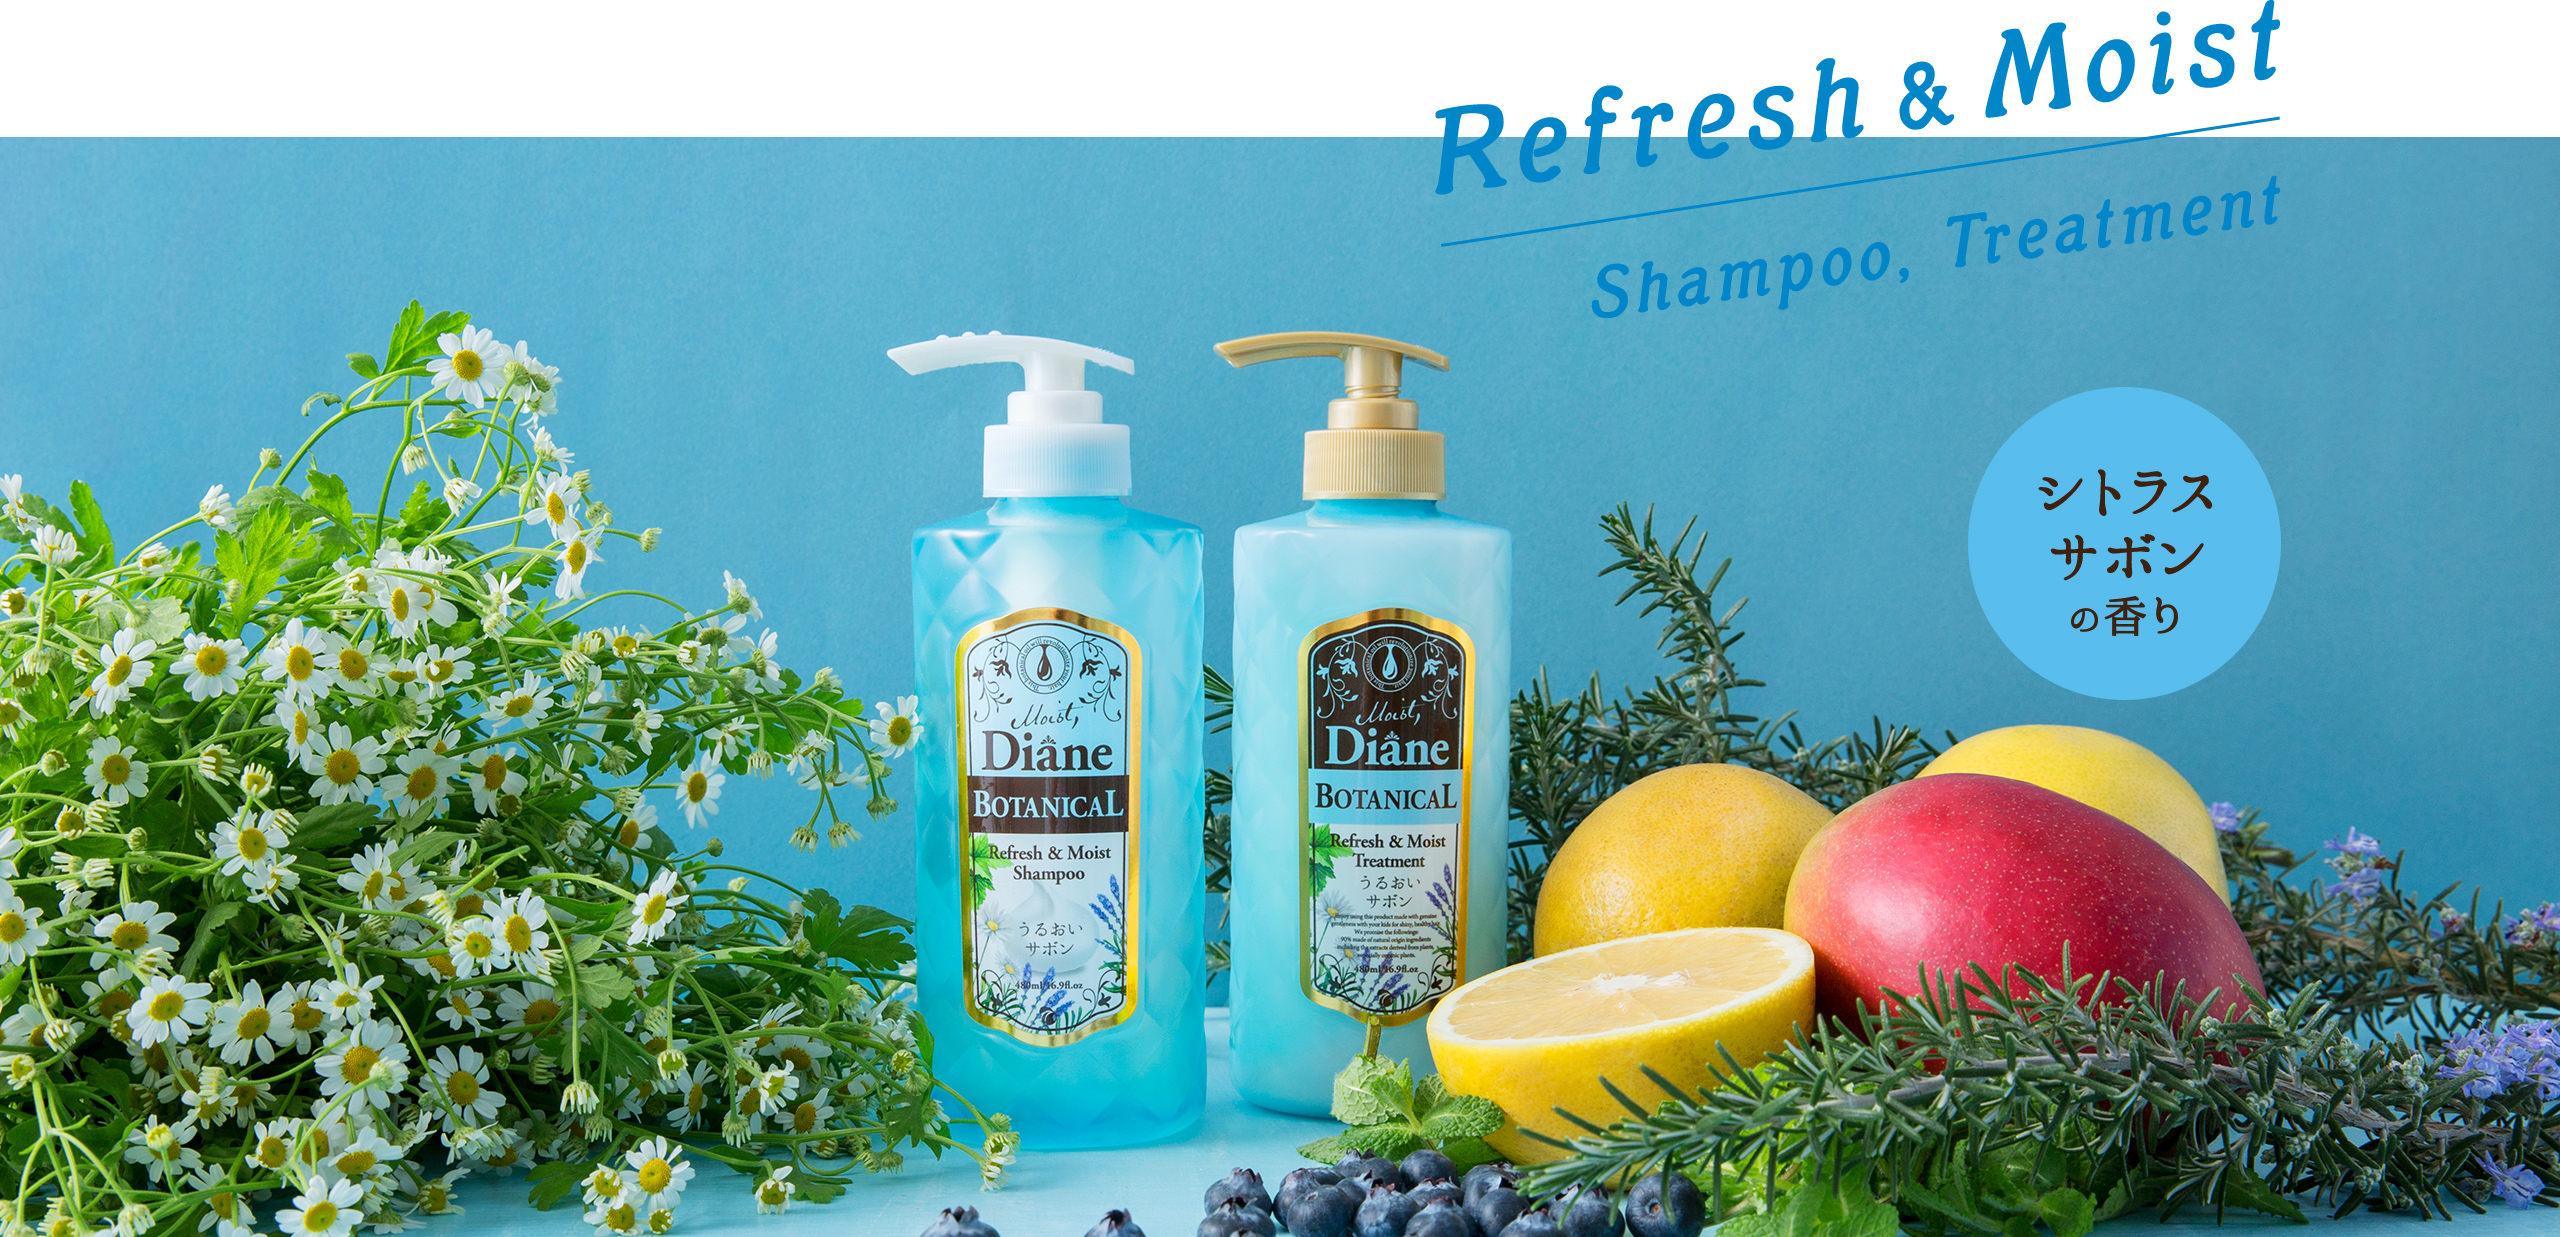 Refresh & Moist Shampoo, Treatment シトラスサボンの香り